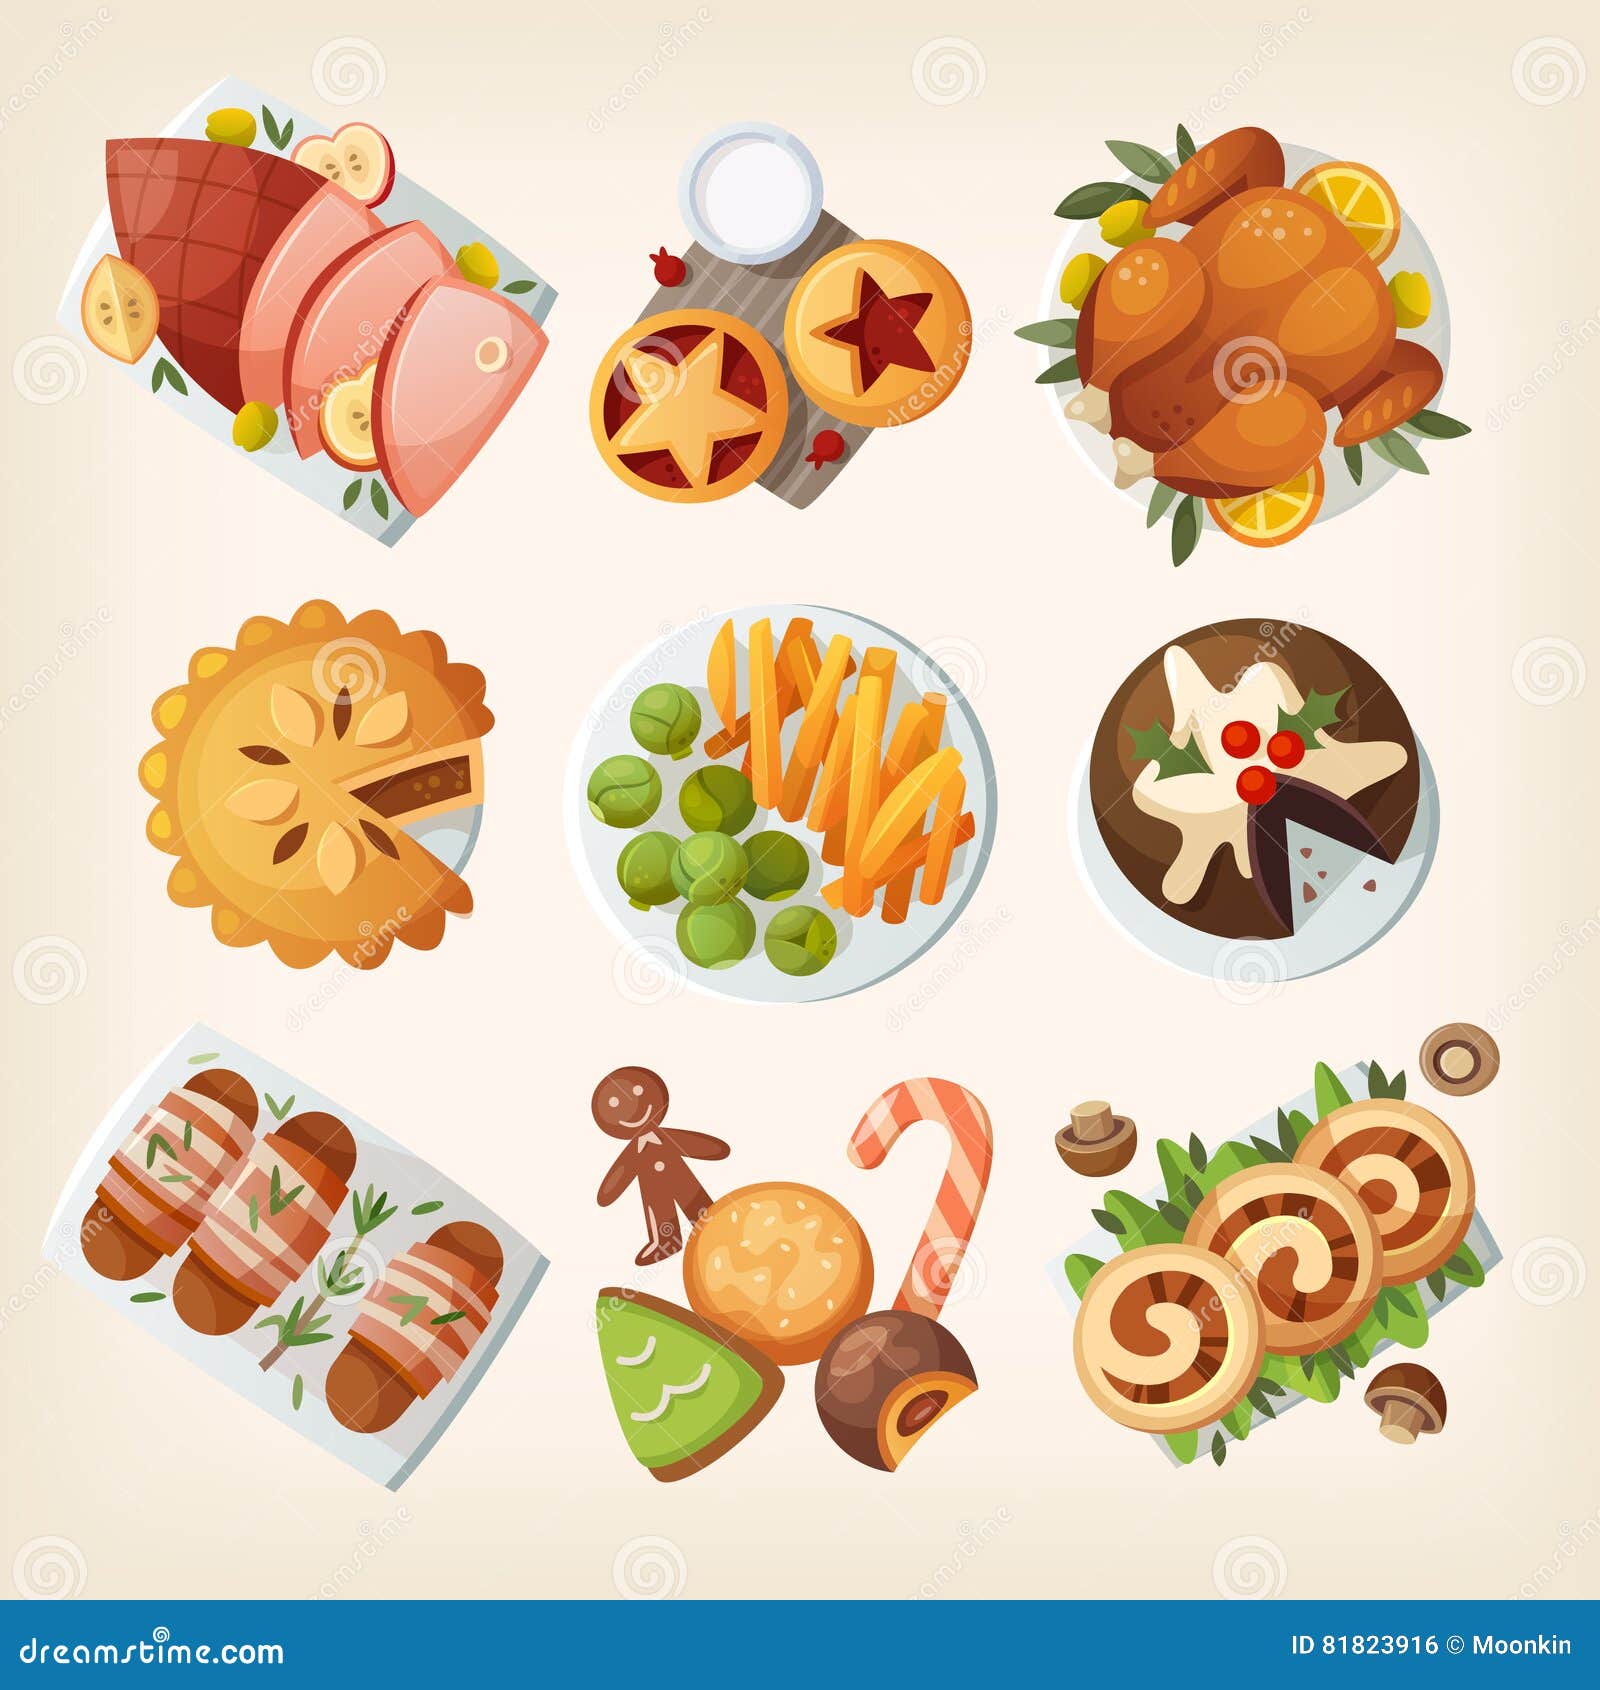 Traditional christmas food stock vector. Illustration of chicken - 81823916